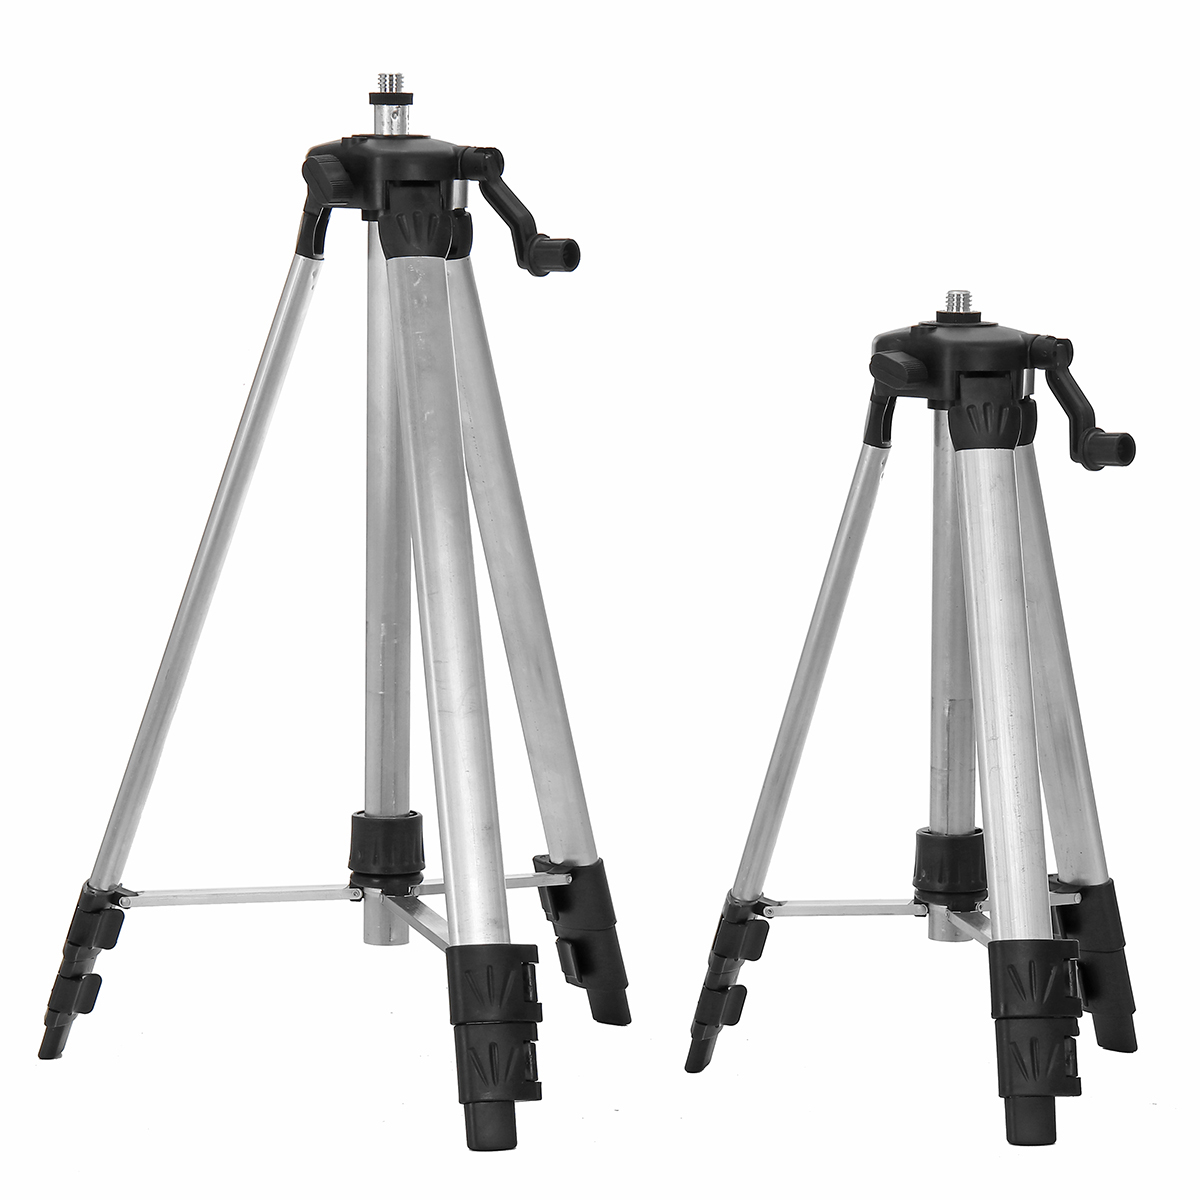 Bakeey 120cm/150cm Universal Aluminum Alloy Telescopic Tripod Adjustable Stand